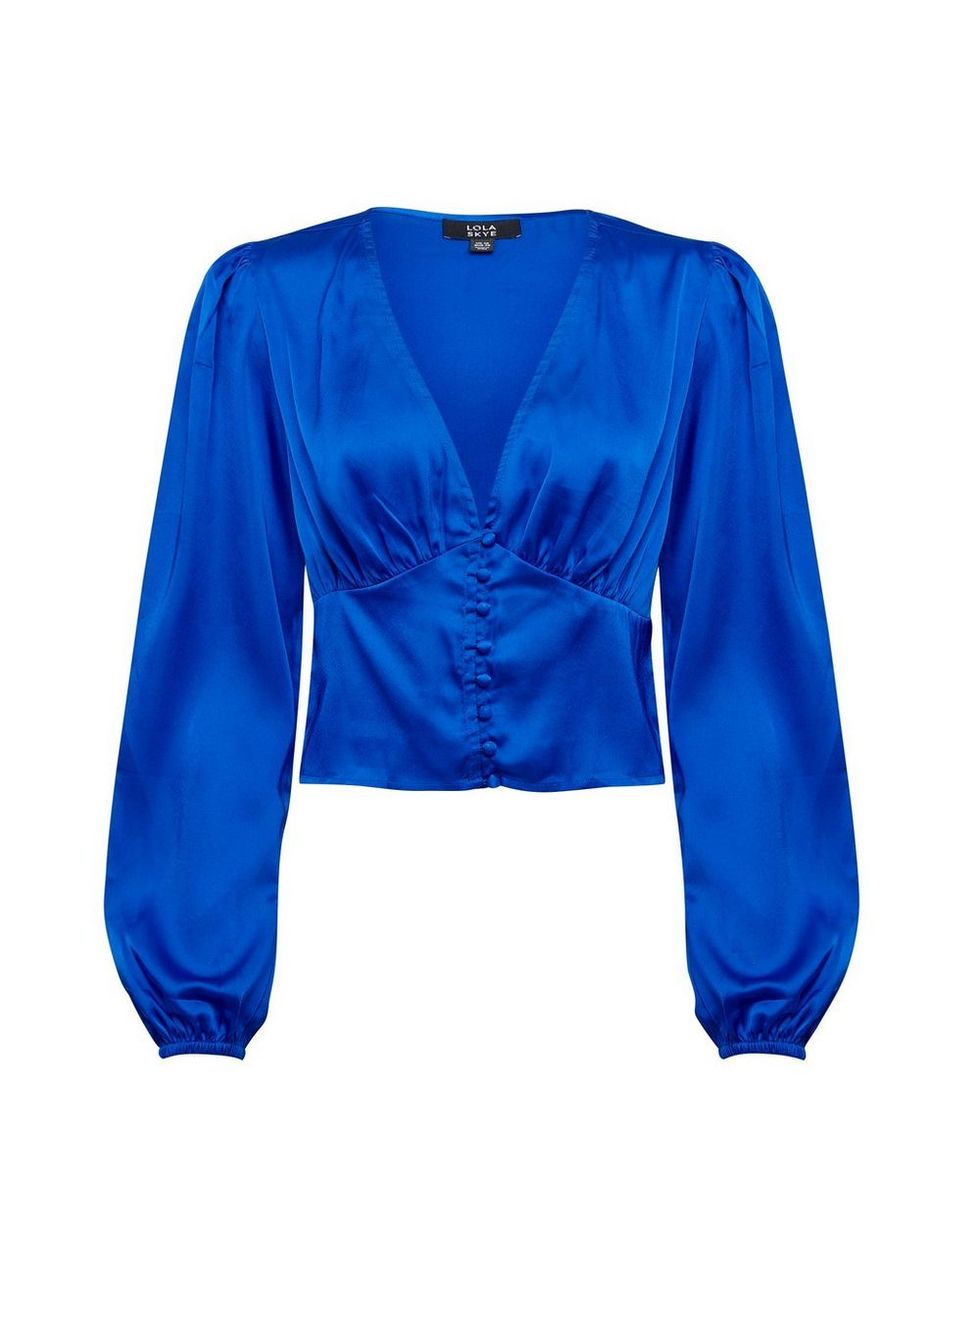 Amanda Holden’s blue Zara shirt is a perfect wardrobe staple